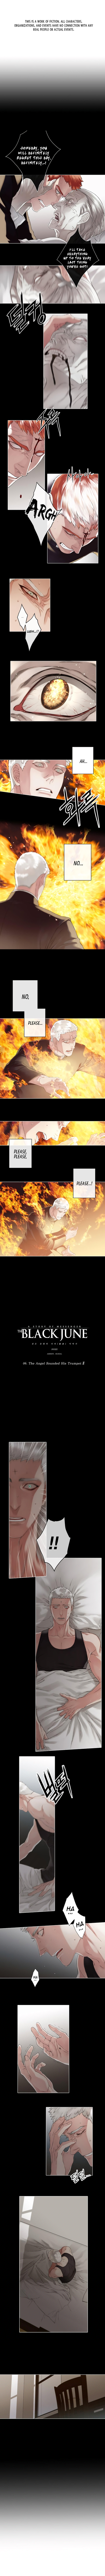 The Black June 6